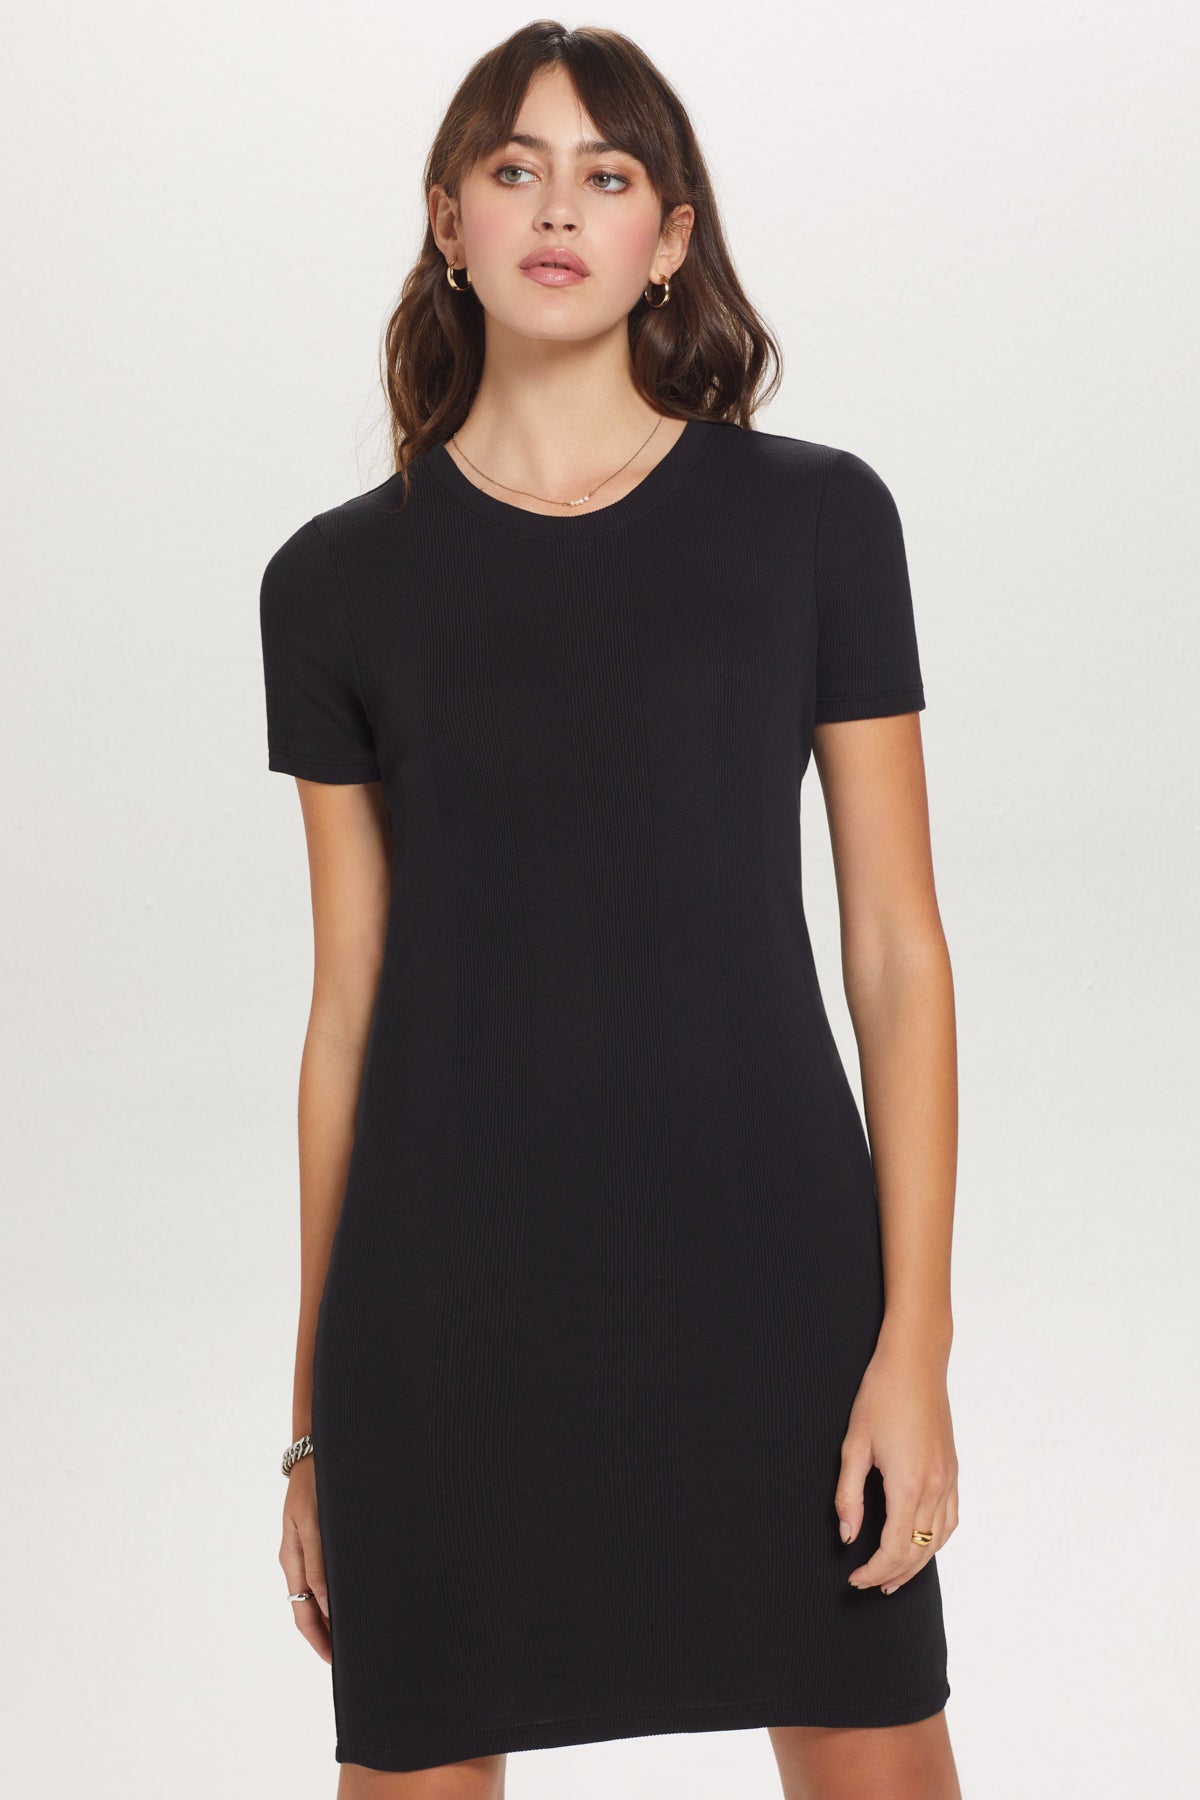 Luxe T-Shirt Dress - Goldie Lewinter